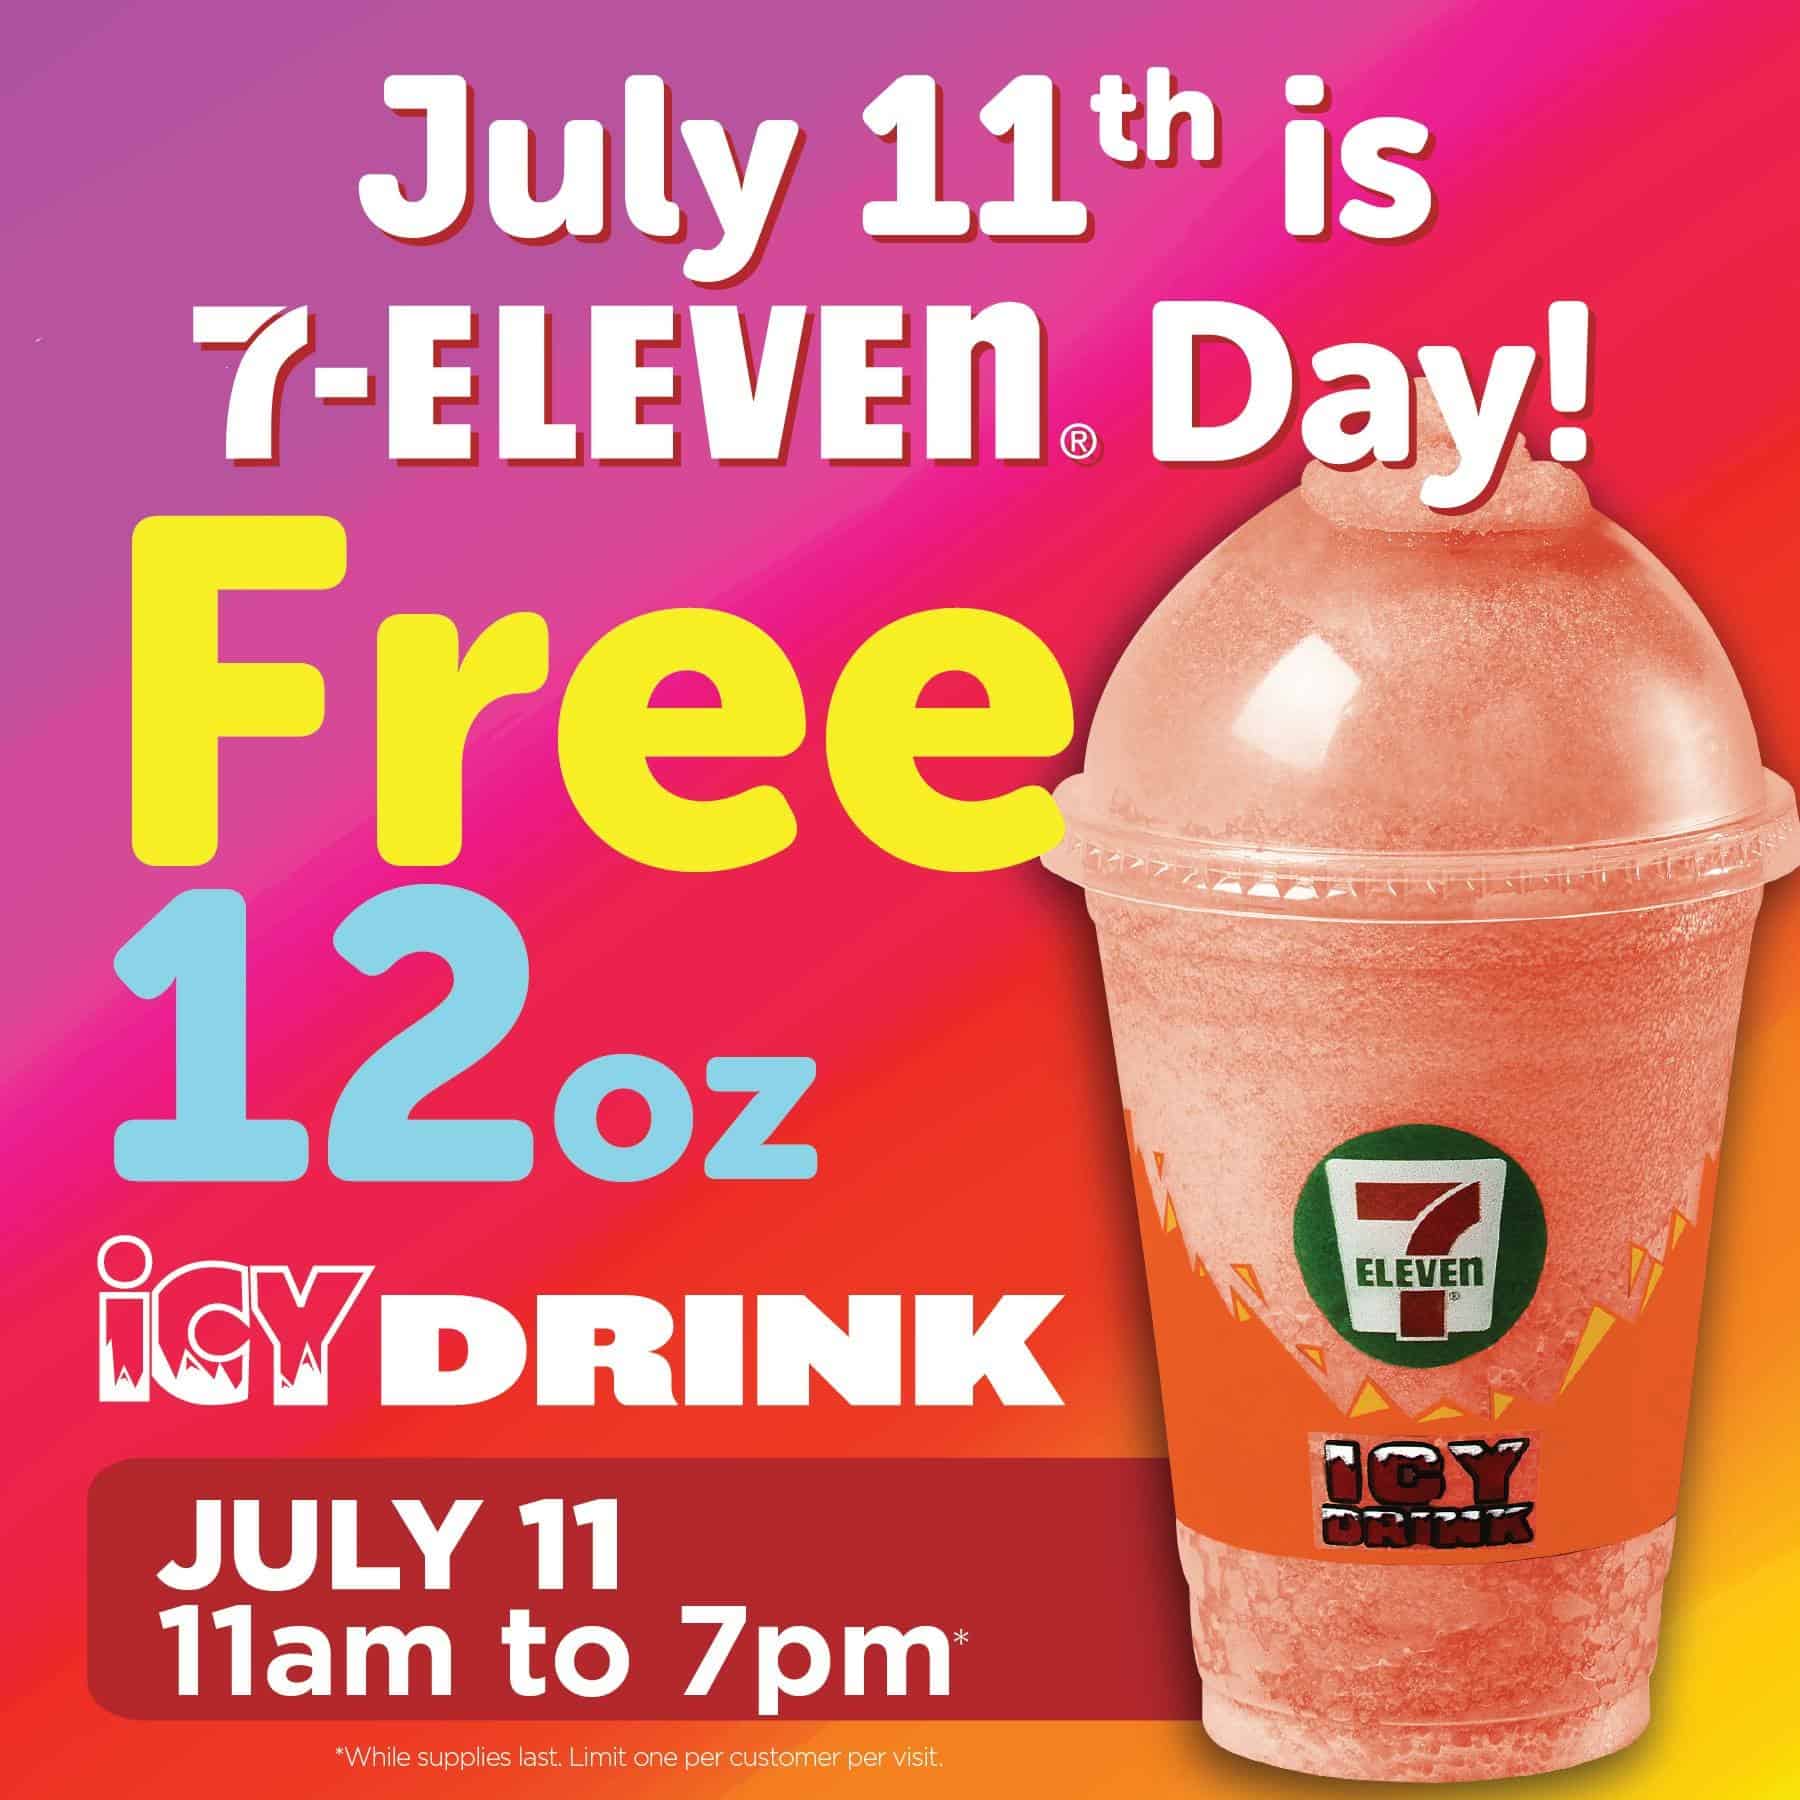 7-eleven  free 12 oz icy drink  7  11